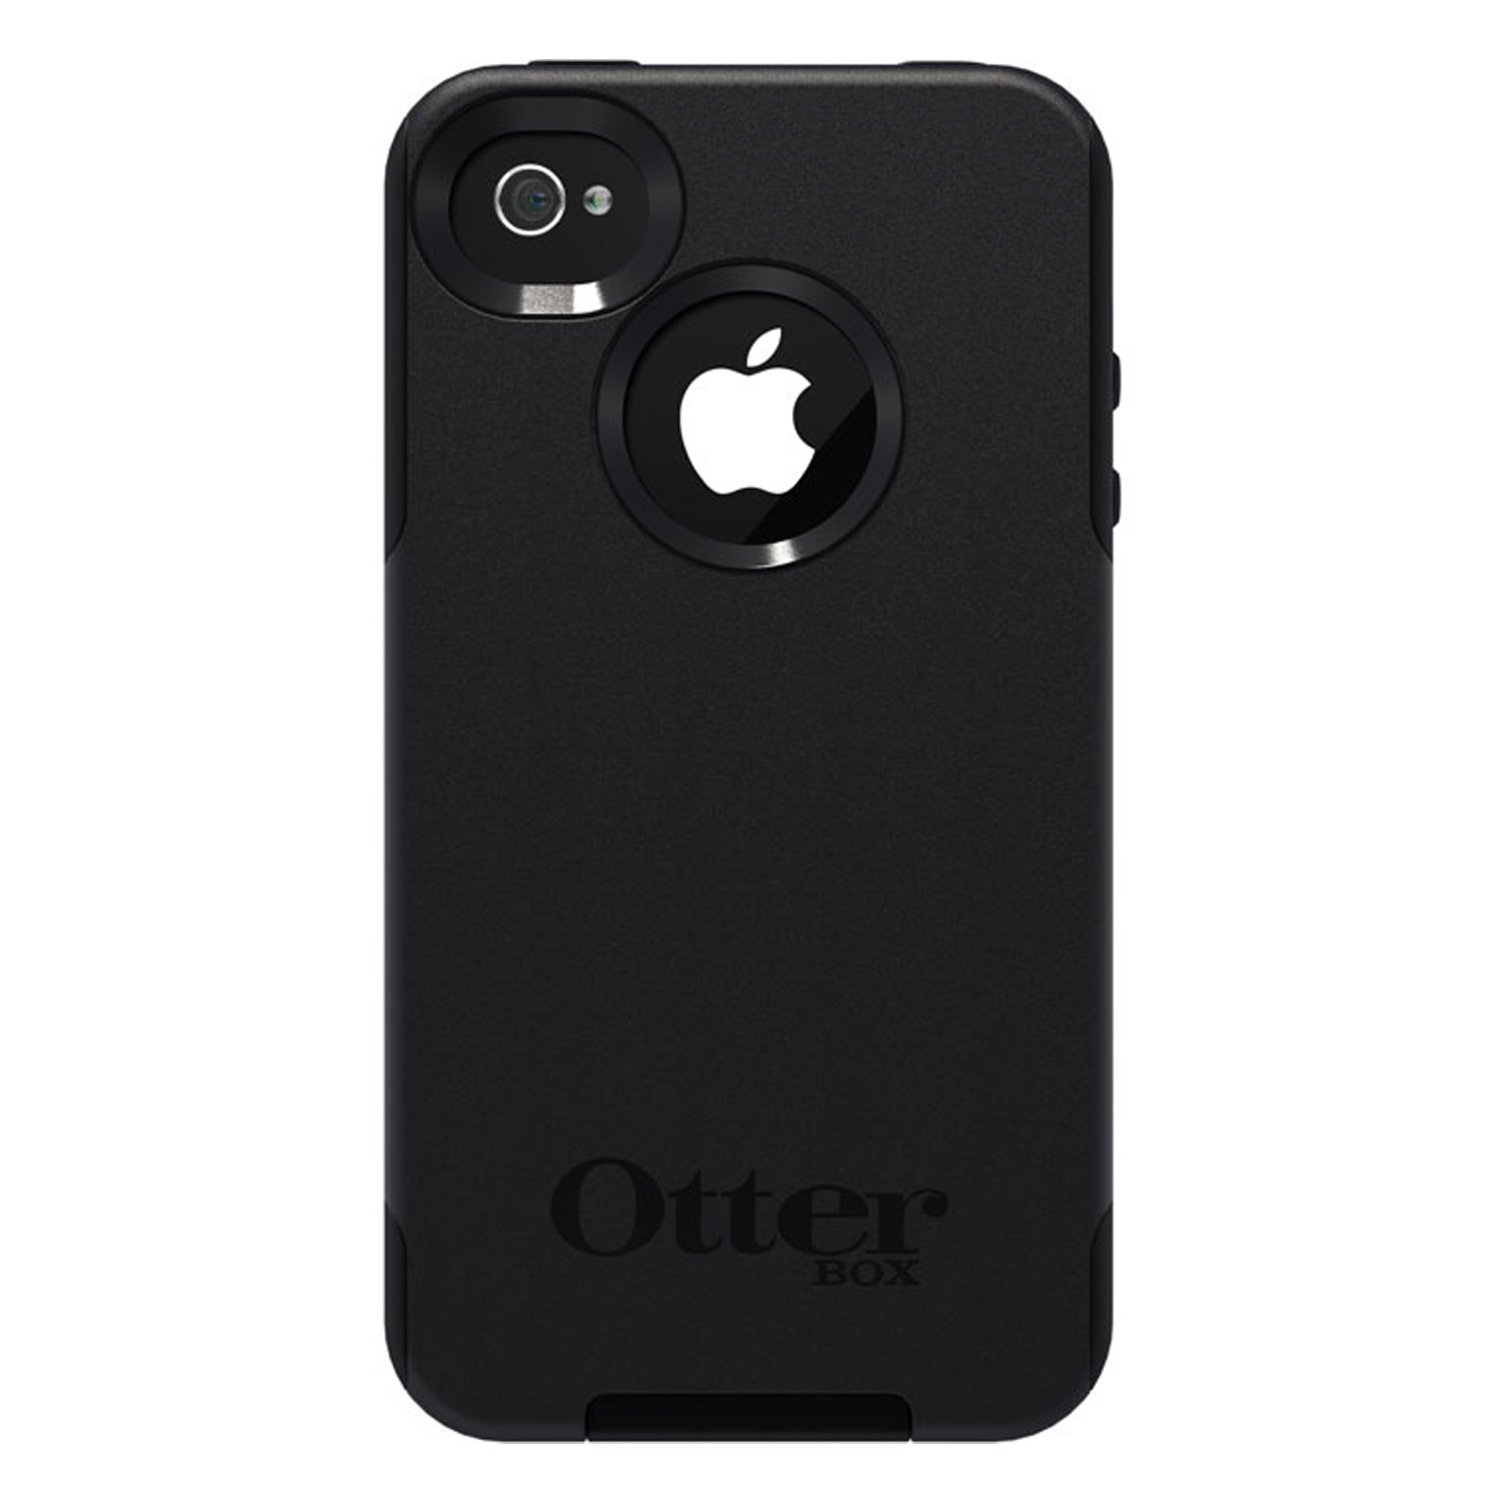 Otterbox 通勤者系列 iPhone 4 / 4S 手機保護套 (黑色) $16.10